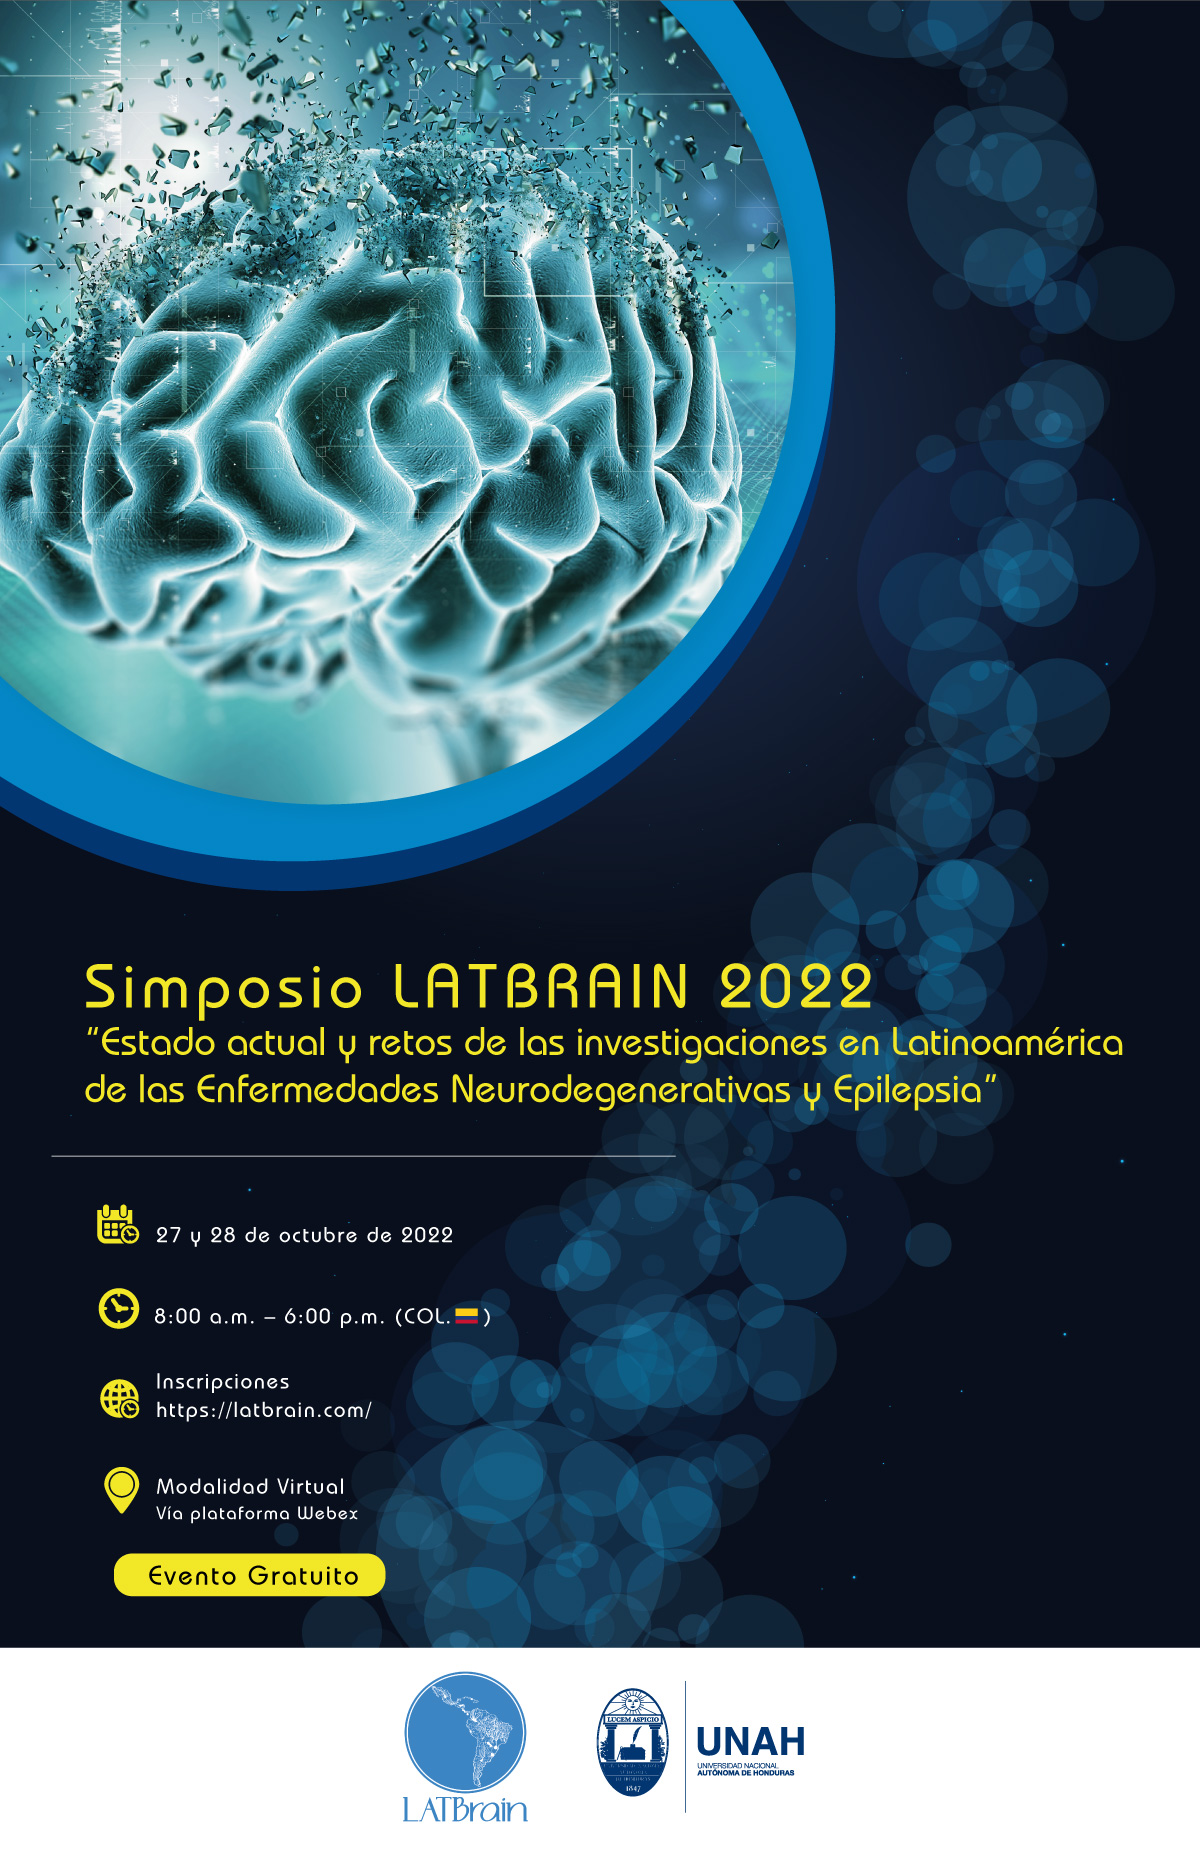 LATBRAIN simposio enfermedades neurodegenerativas 2022